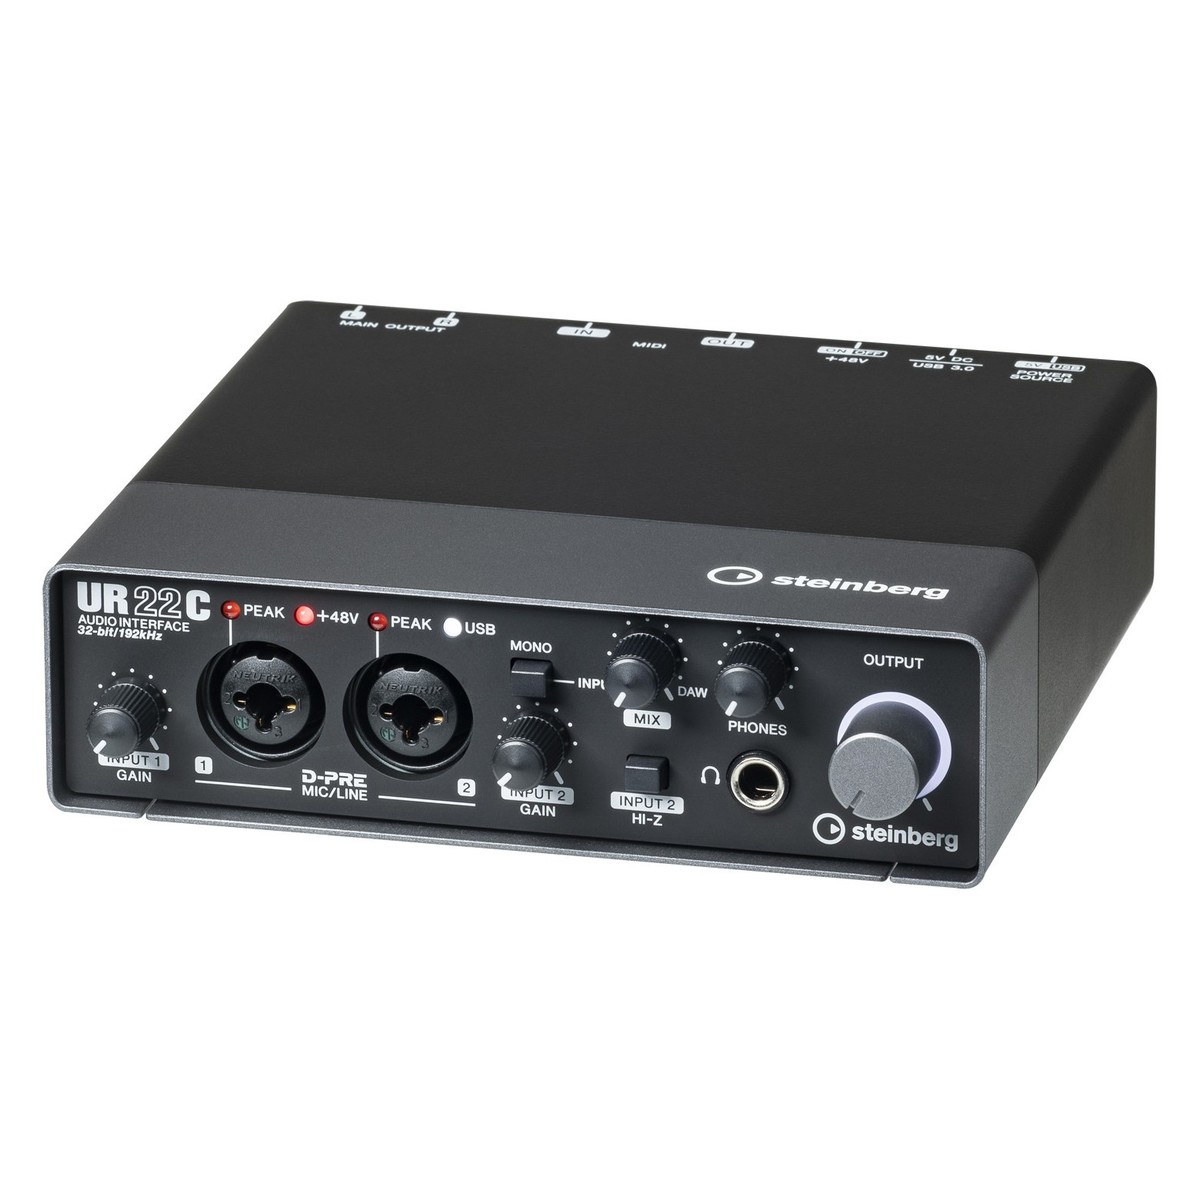 STEINBERG UR22C INTERFACCIA AUDIO USB 3.0 MIDI 2 CANALI CON D-PRE 24BIT 192Khz 1